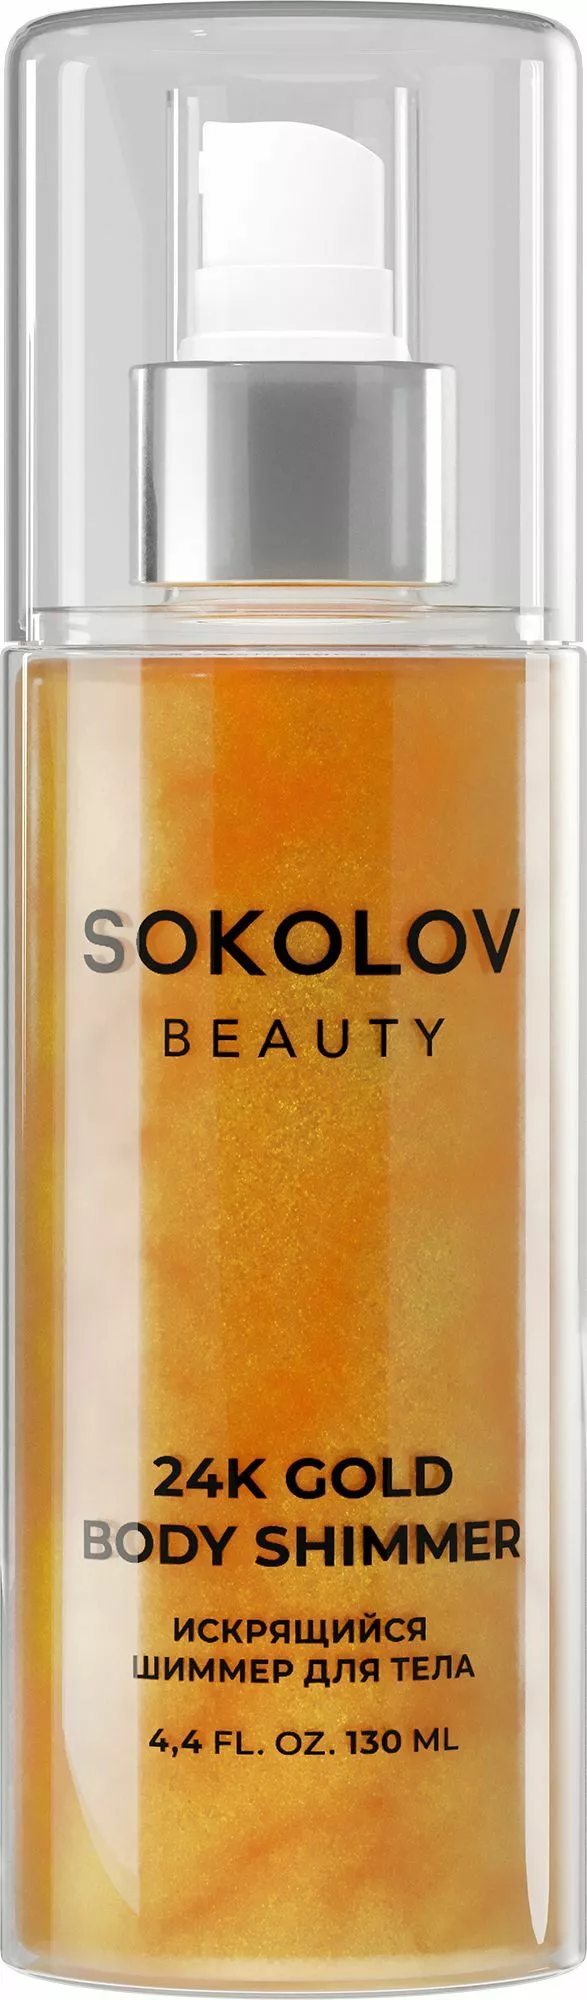 Бренд SOKOLOV представил косметику на основе драгоценных ингредиентов